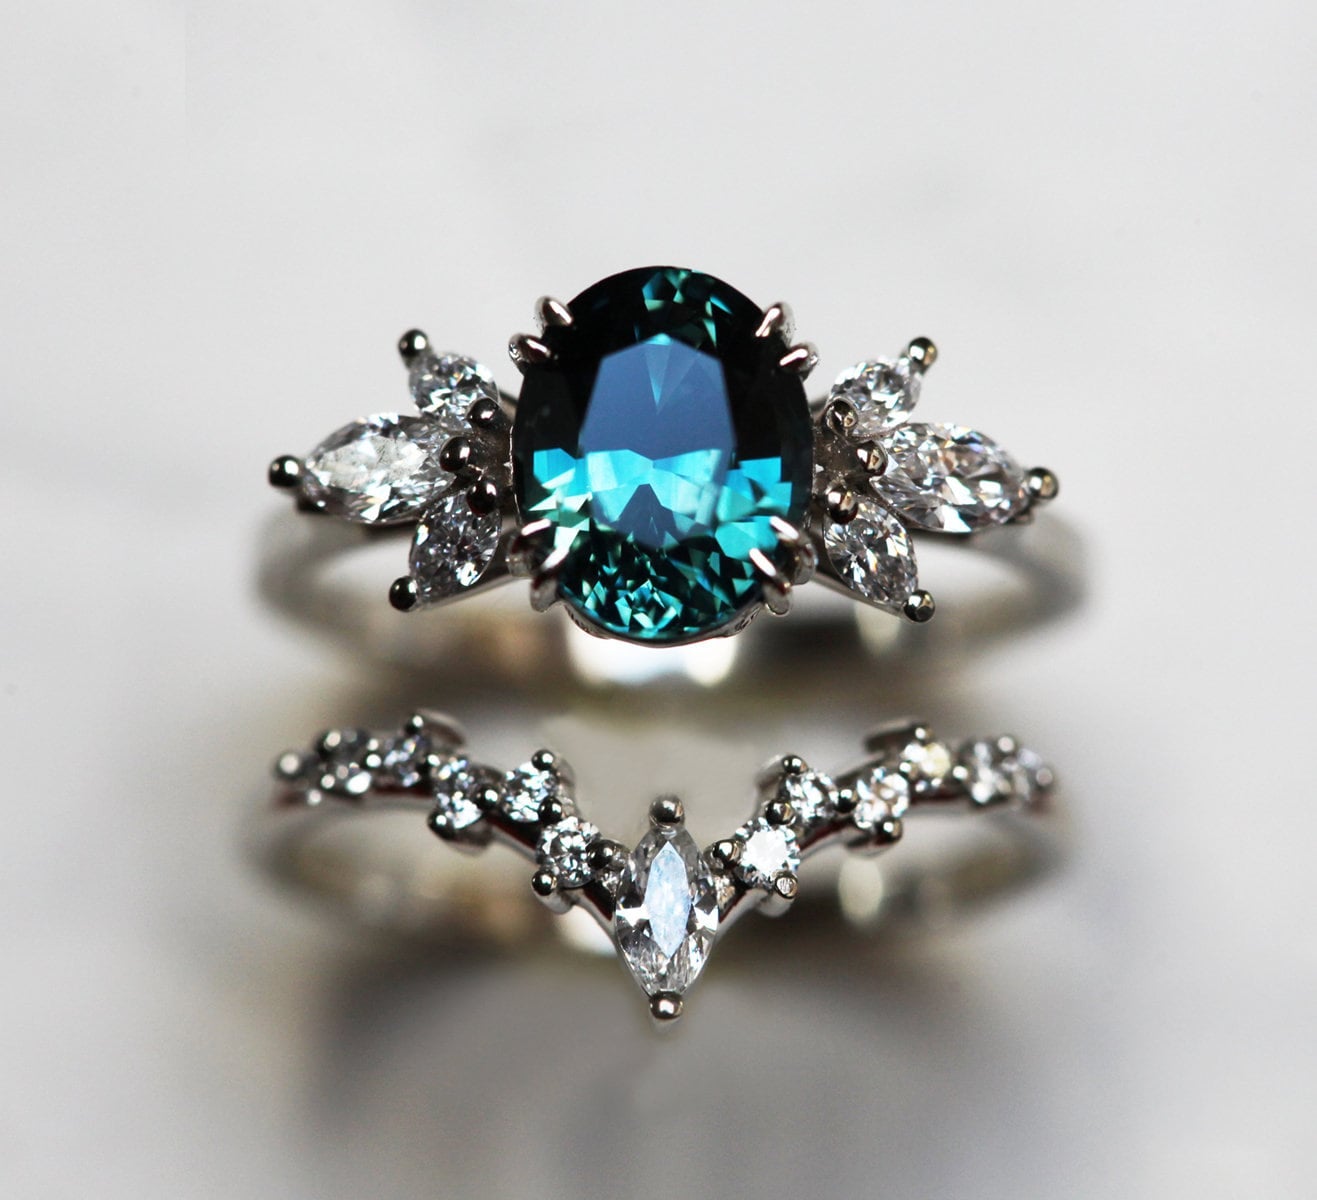 Oval-shaped black opal and white diamond ring set